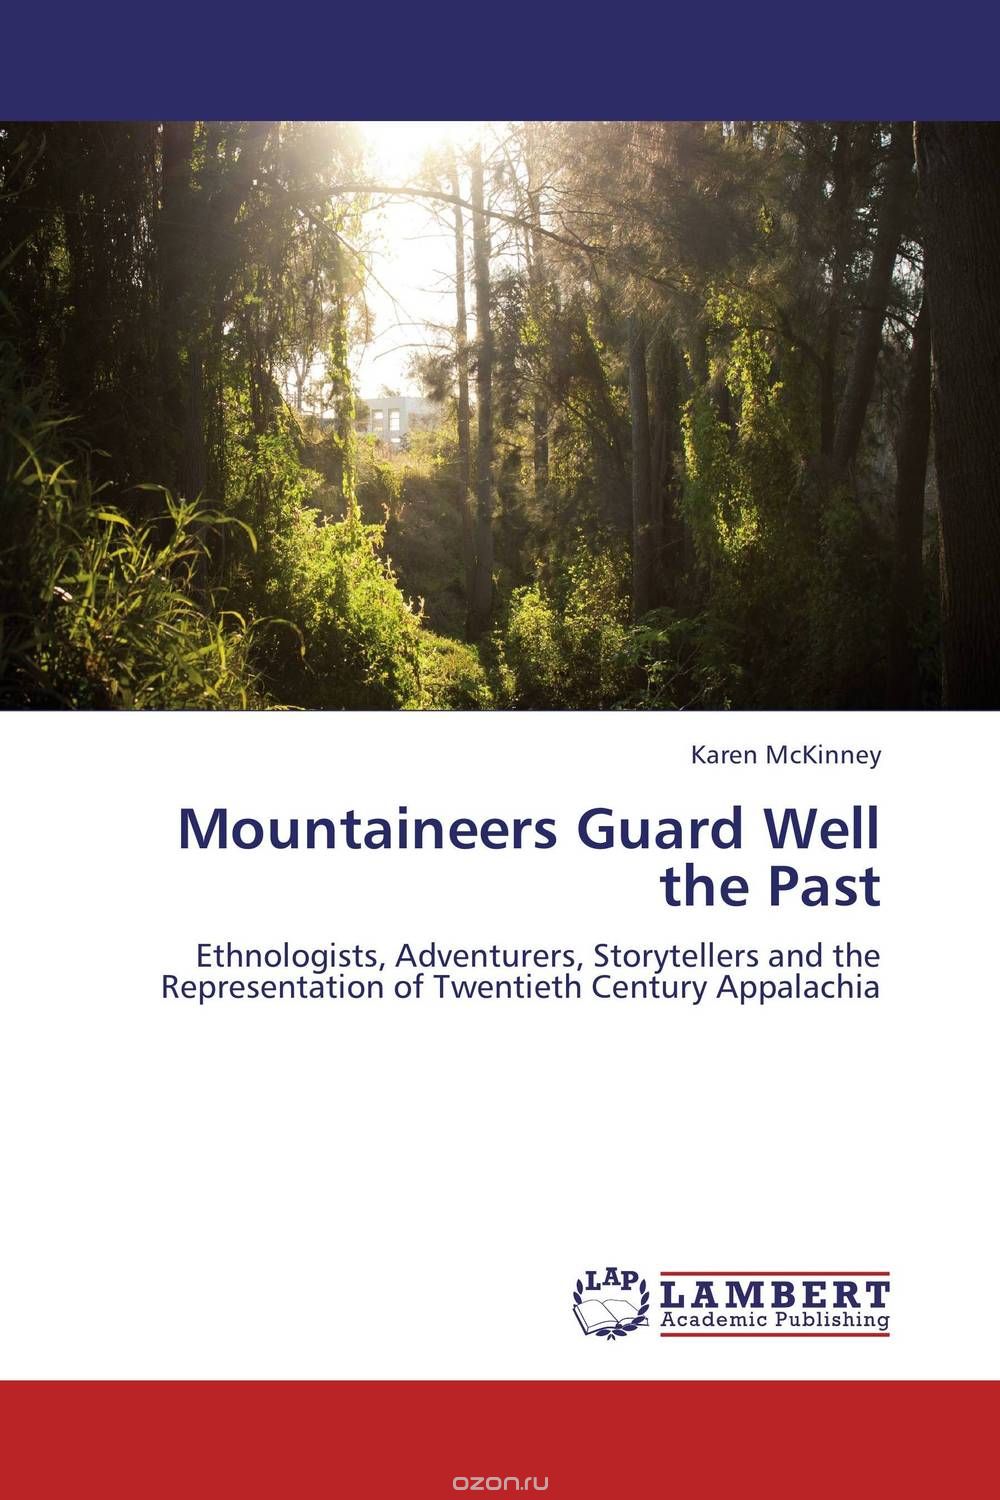 Скачать книгу "Mountaineers Guard Well the Past"